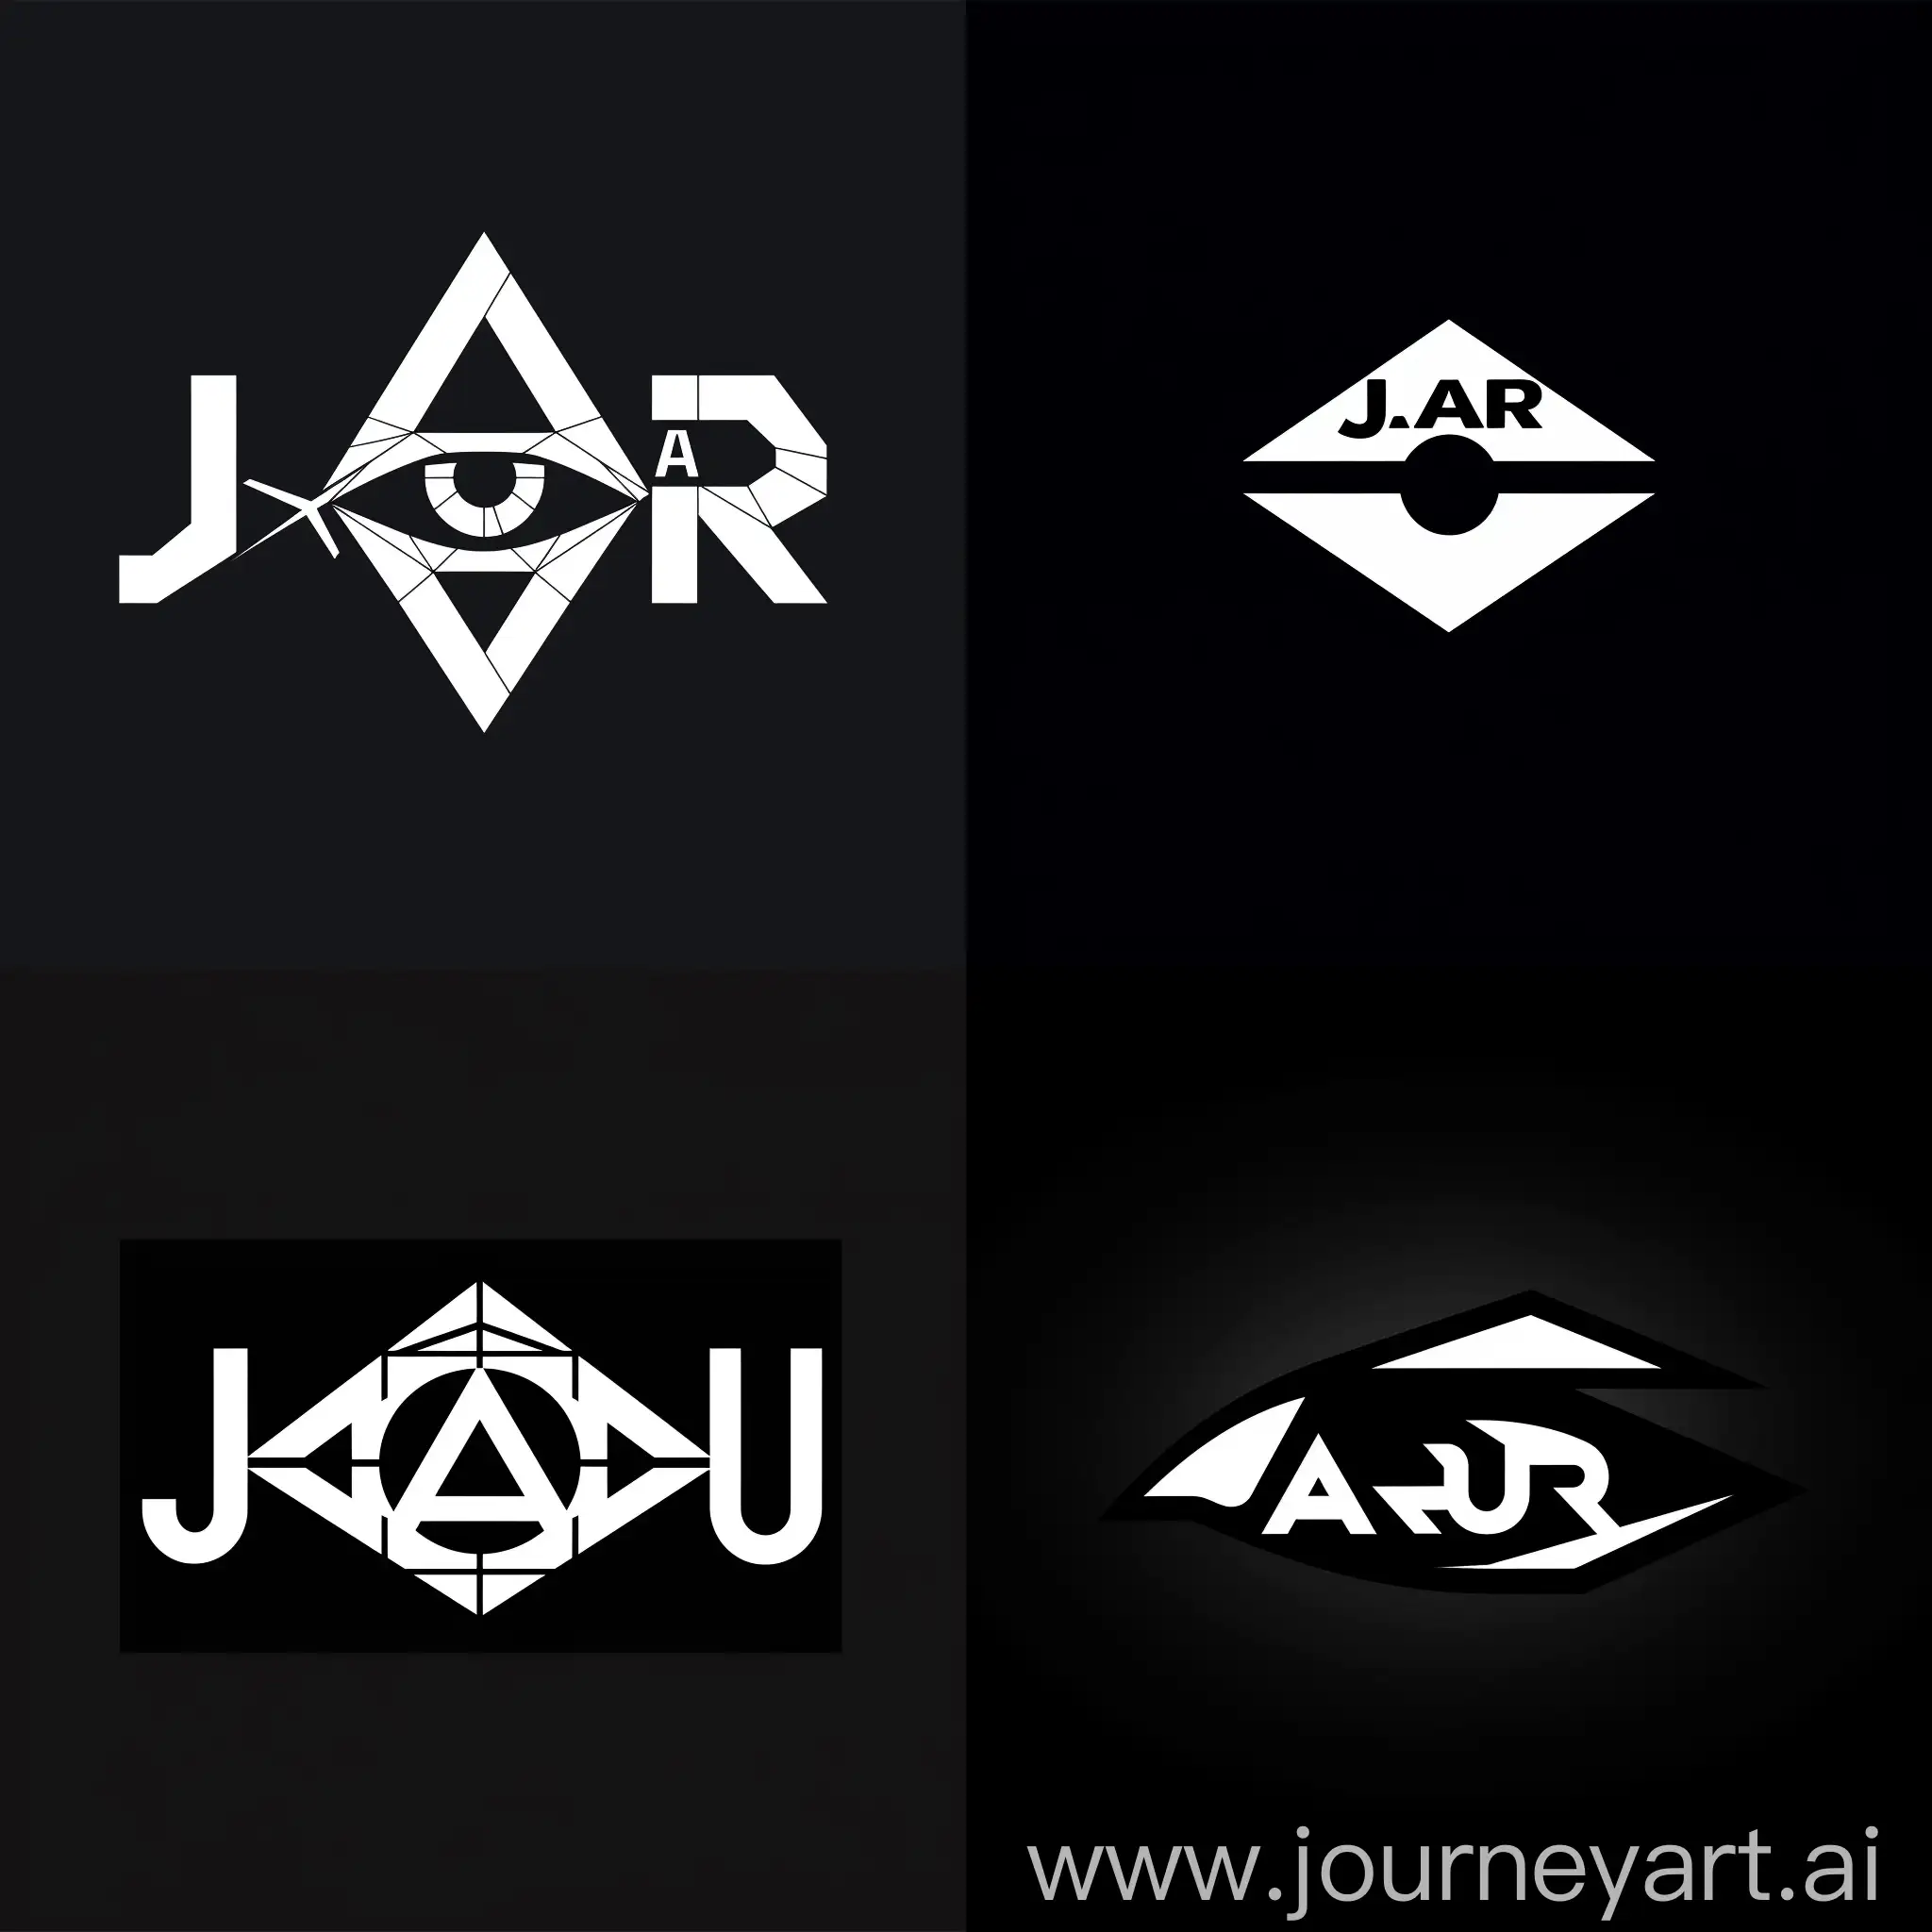 Modern-Geometric-Logo-Design-for-JARU-with-Innovative-EyeInspired-Shapes